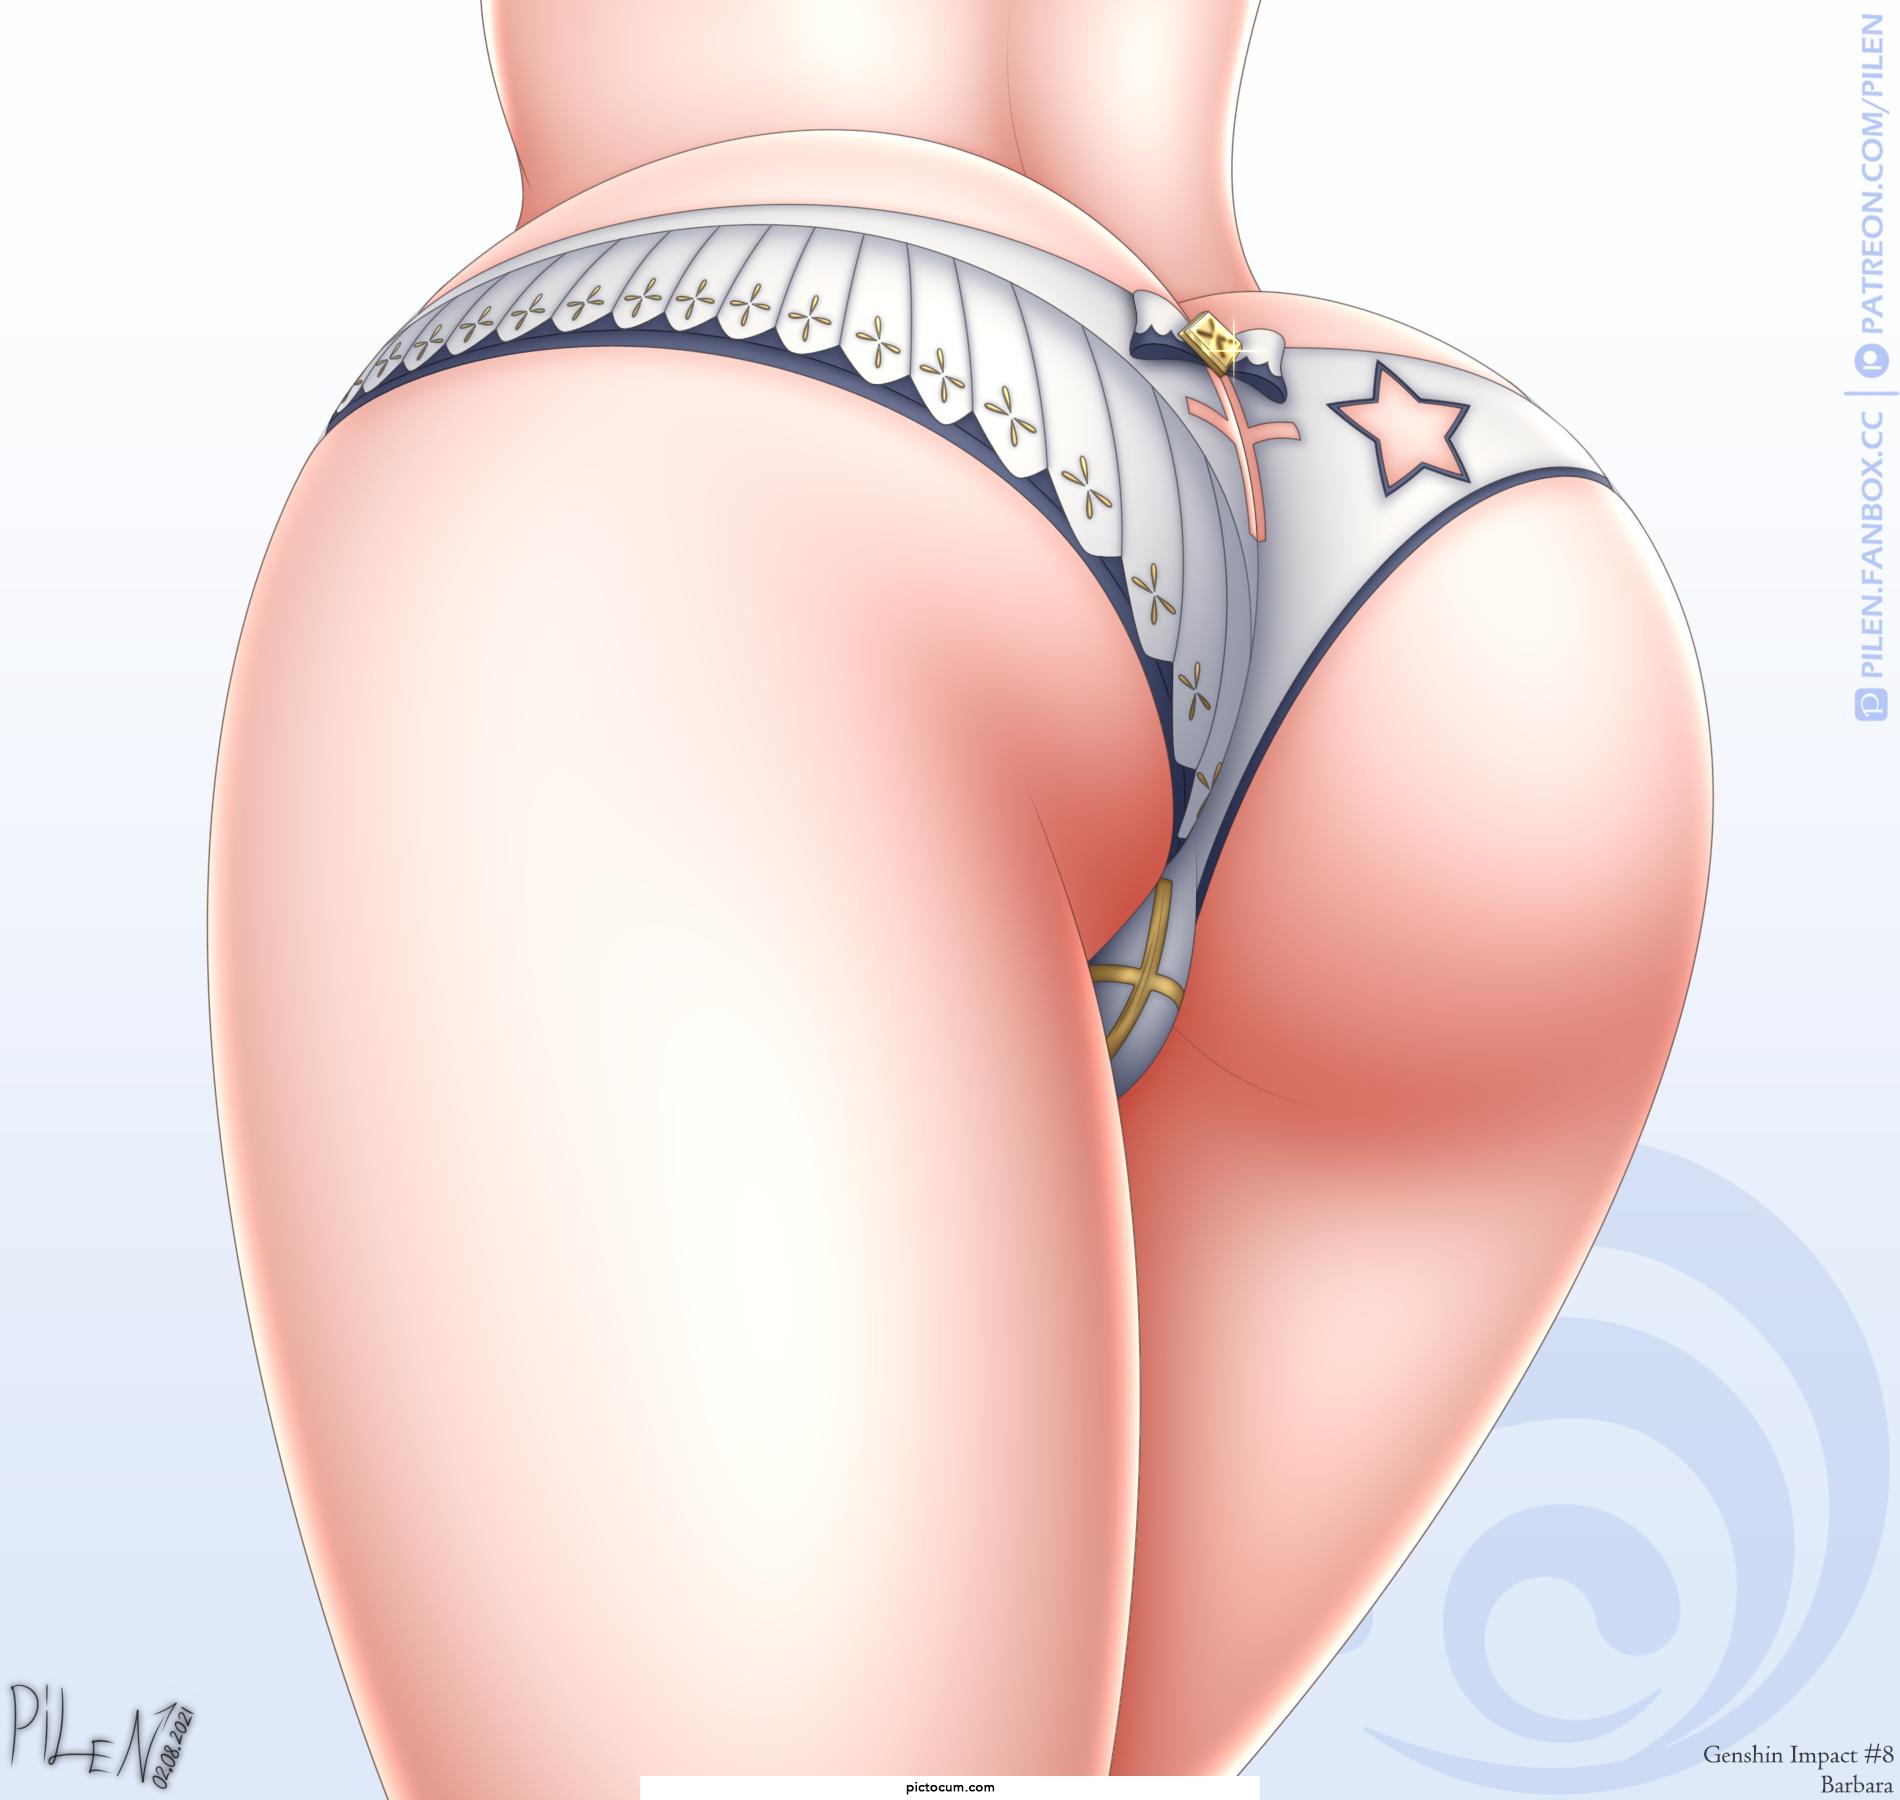 Barbara's Booty [Genshin Impact] (PileN)